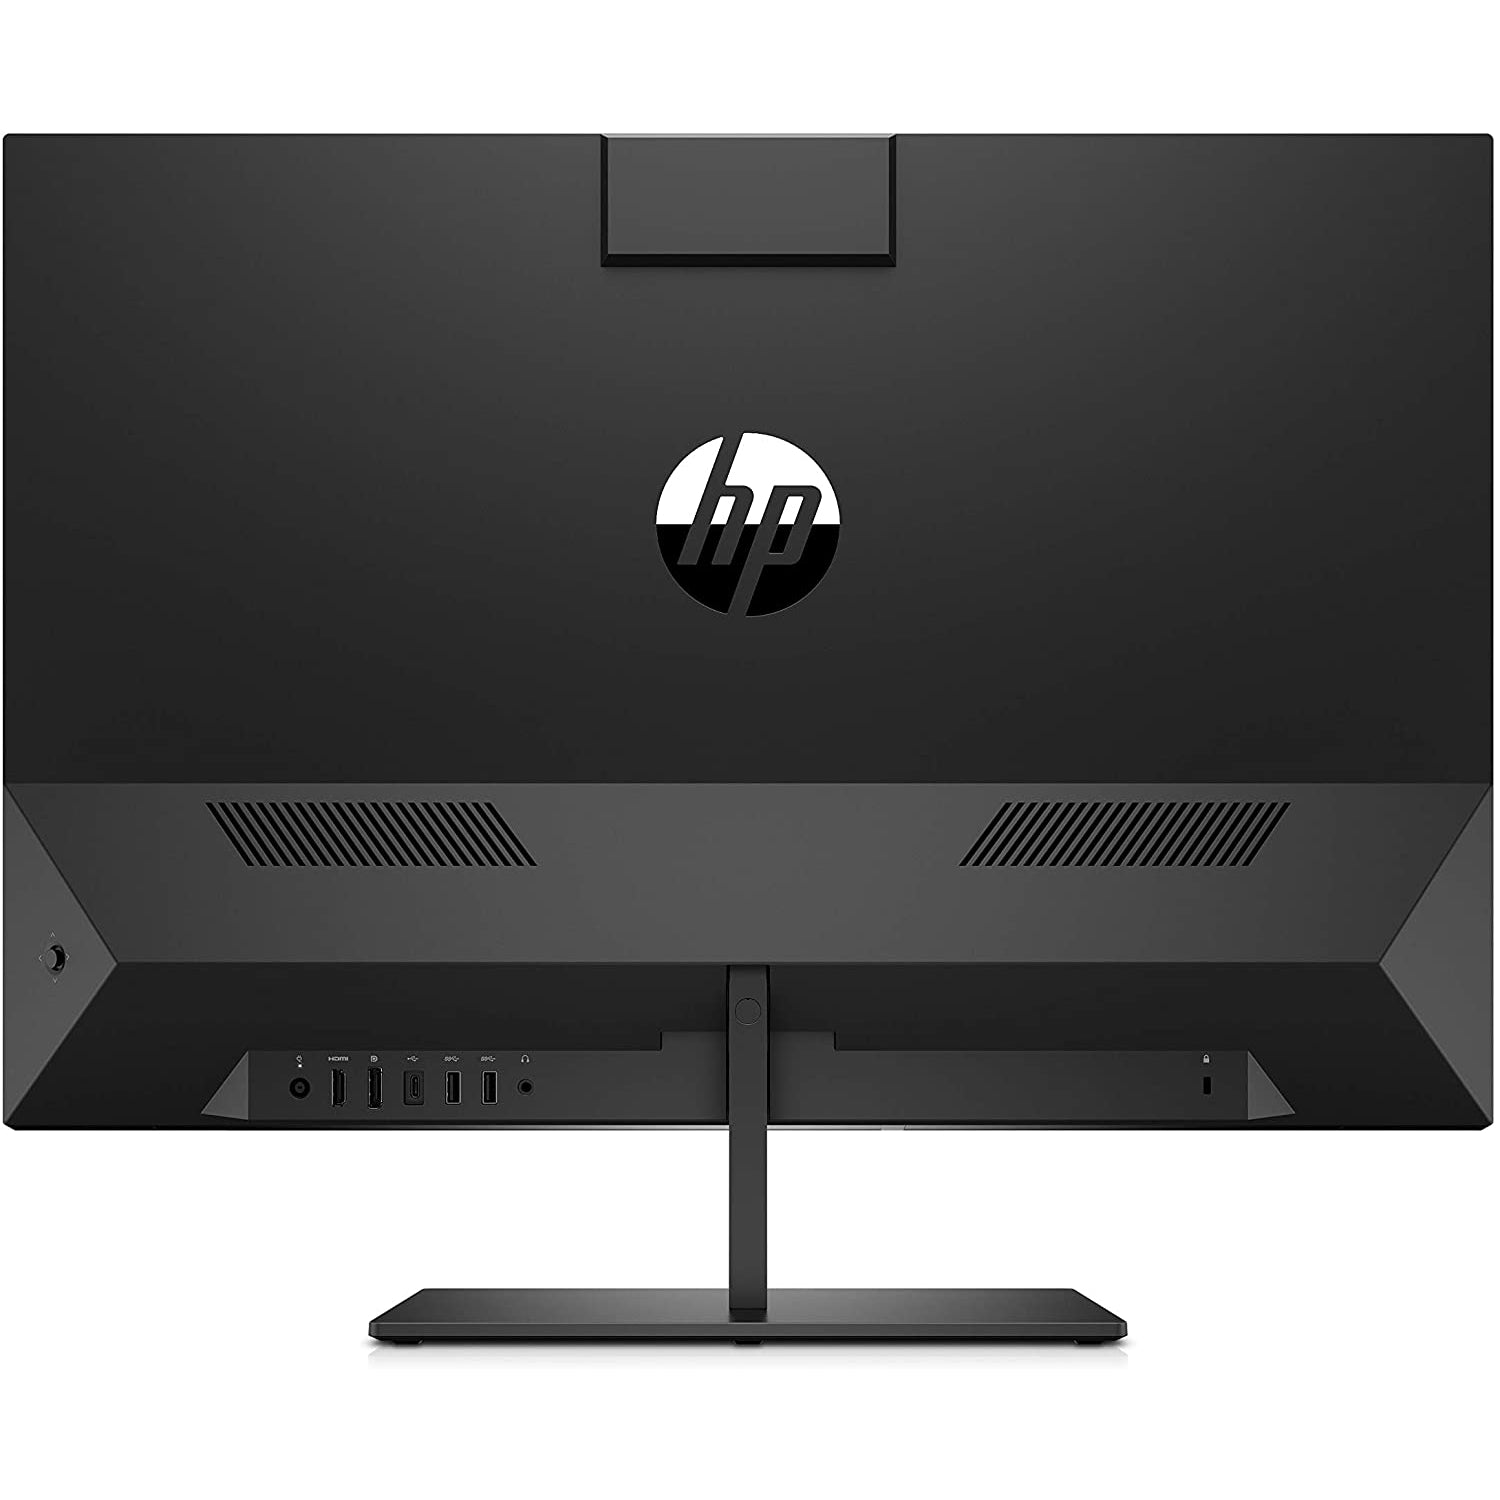 HP Pavilion 27 FHD Display Full HD, Black